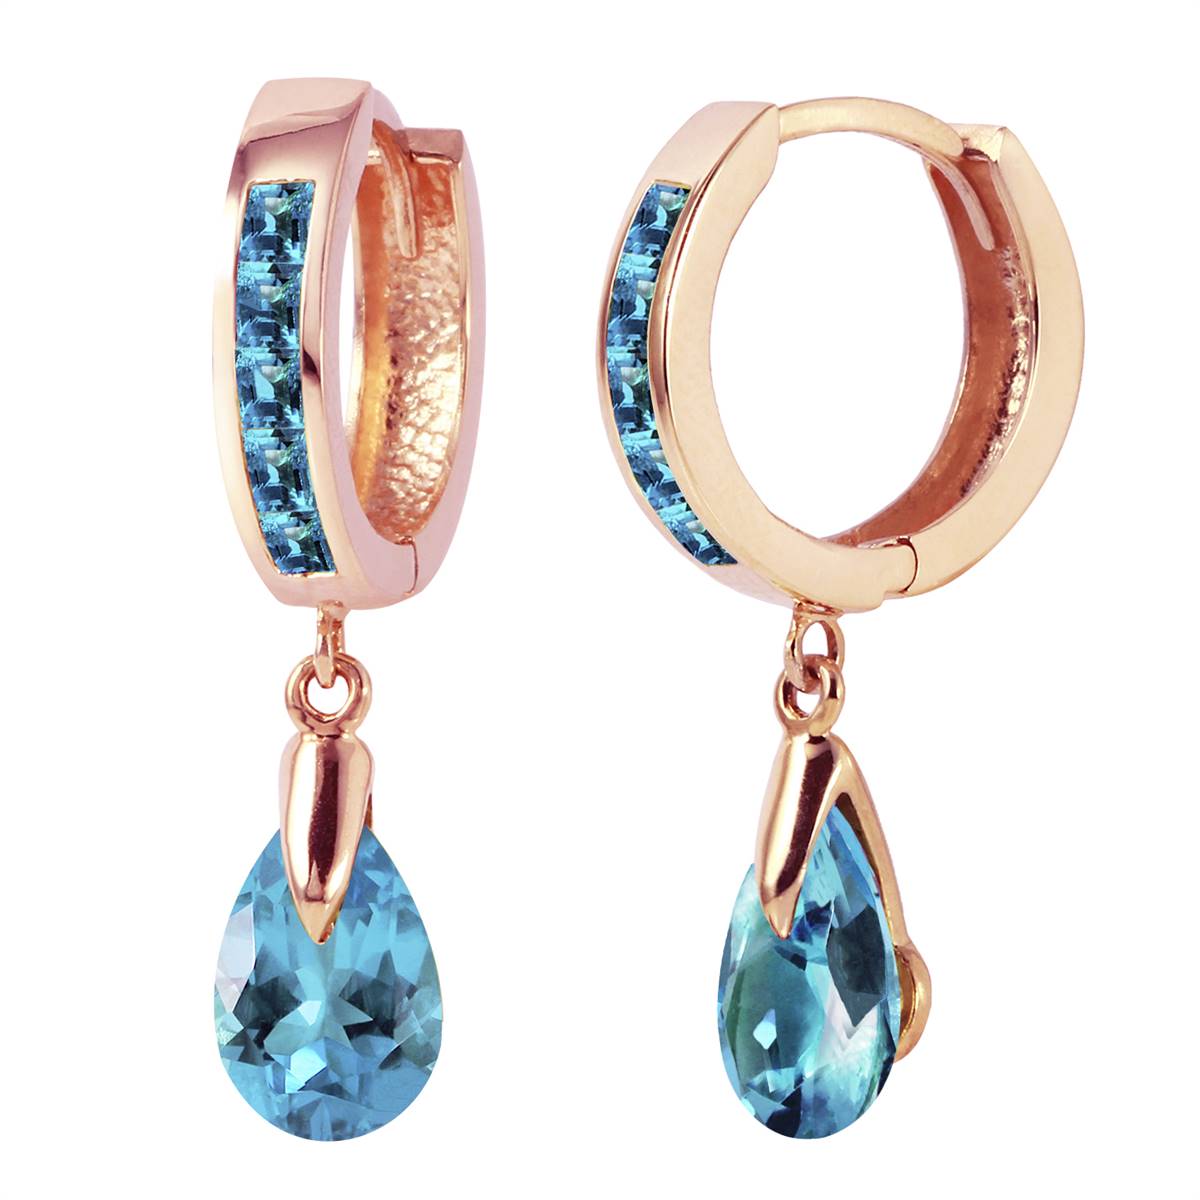 4.2 Carat 14K Solid Rose Gold Huggie Earrings Dangling Blue Topaz